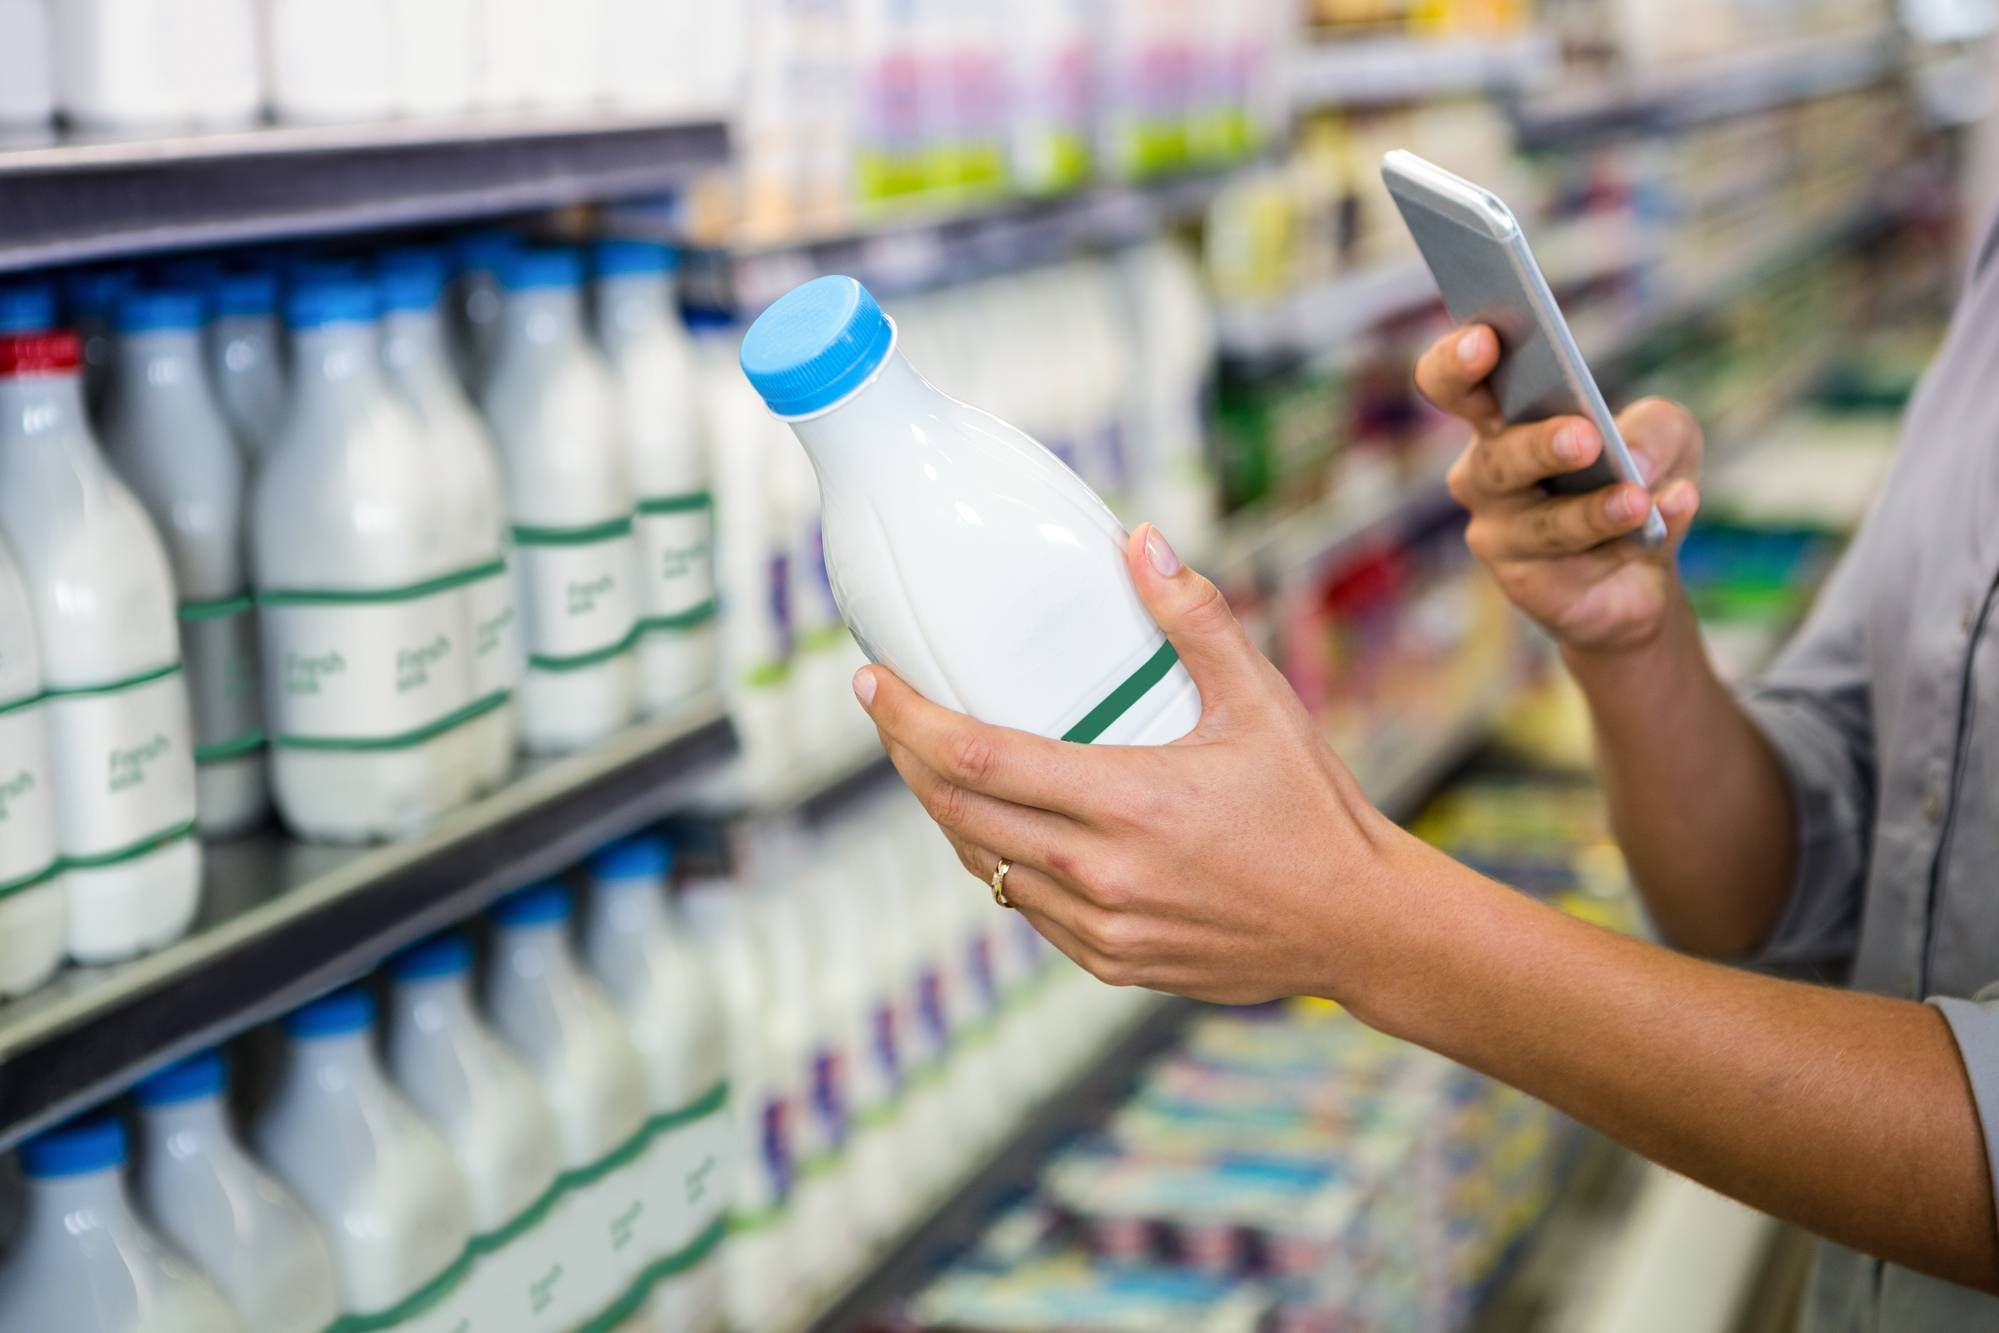 Farmland milk allegedly contains false "no antibiotics" claims.